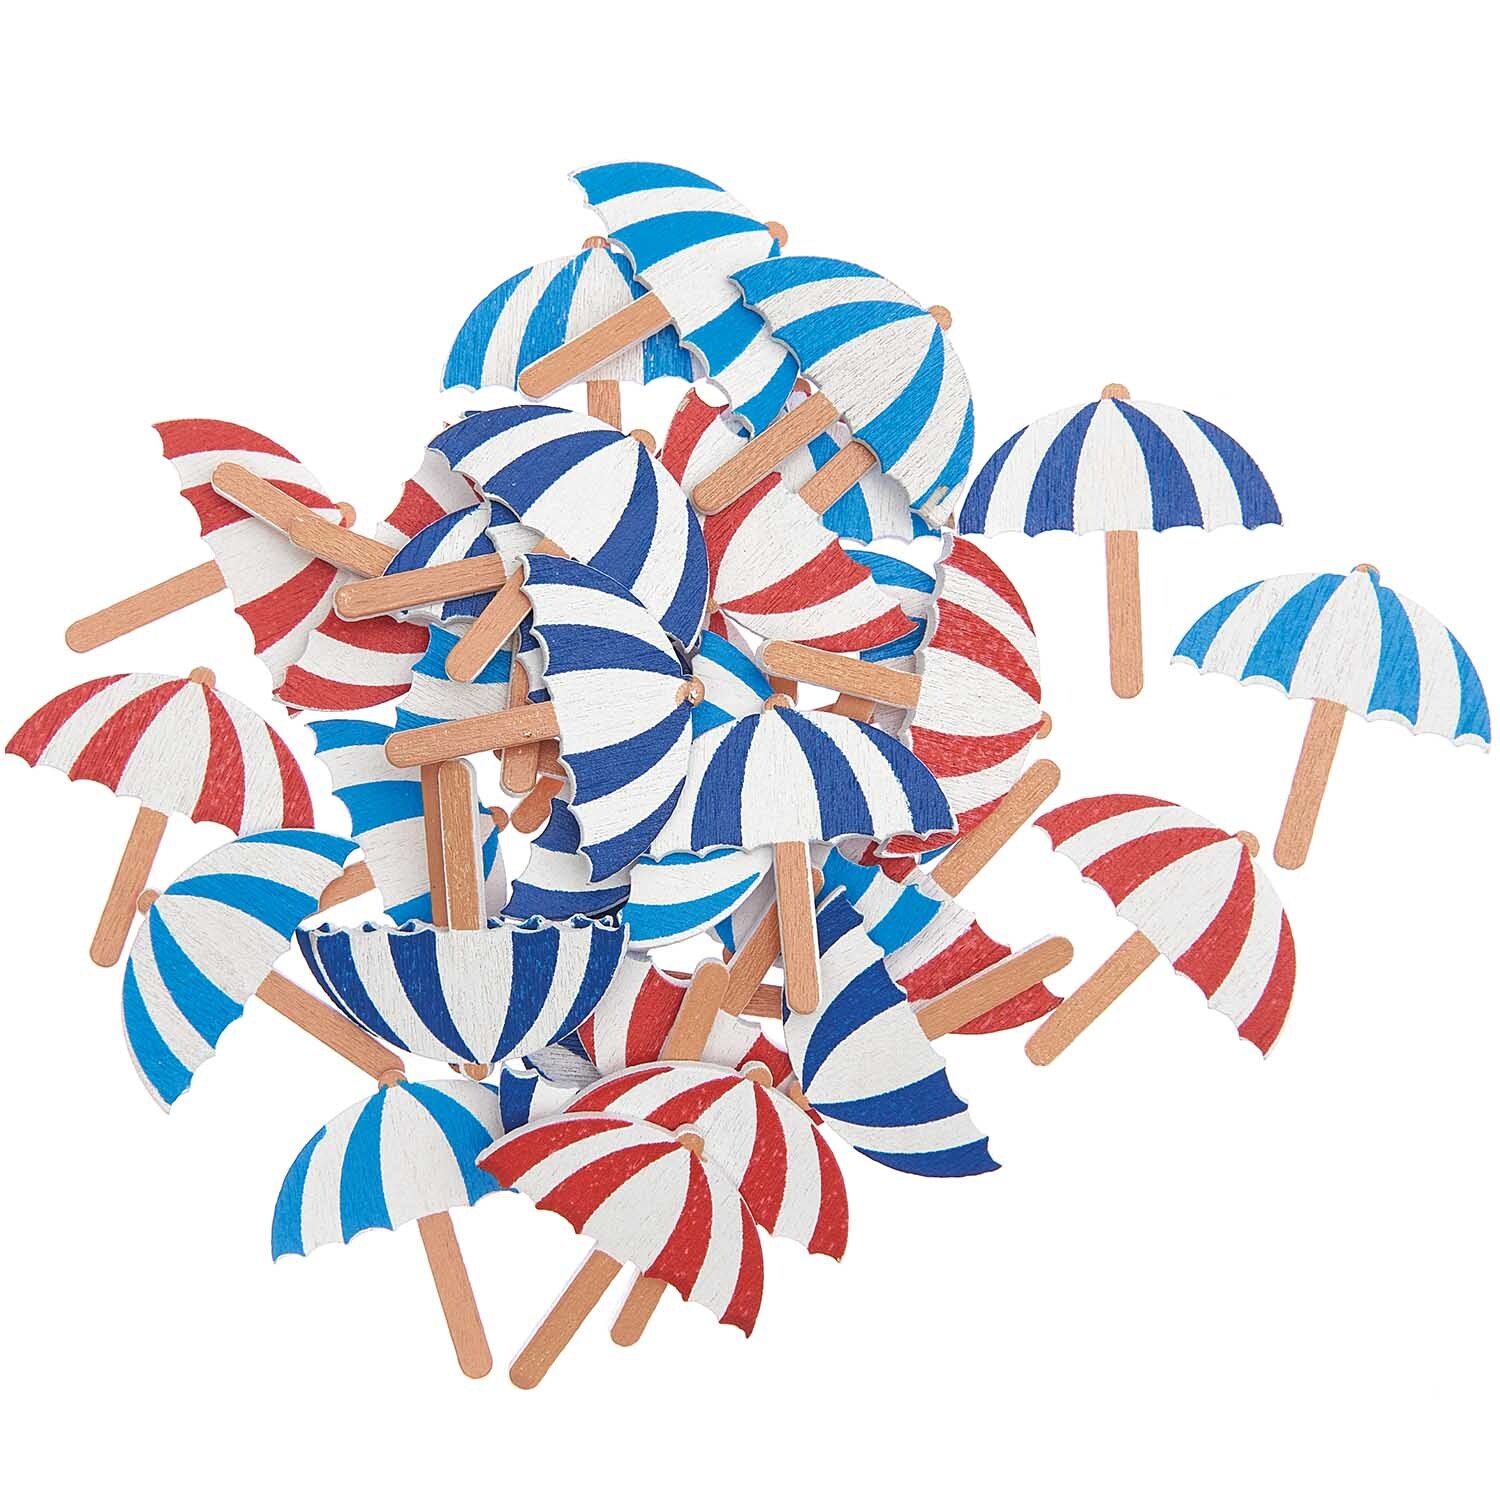 Holzstreu Sonnenschirm rot-weiß/blau-weiß 2x2cm 36 Stück